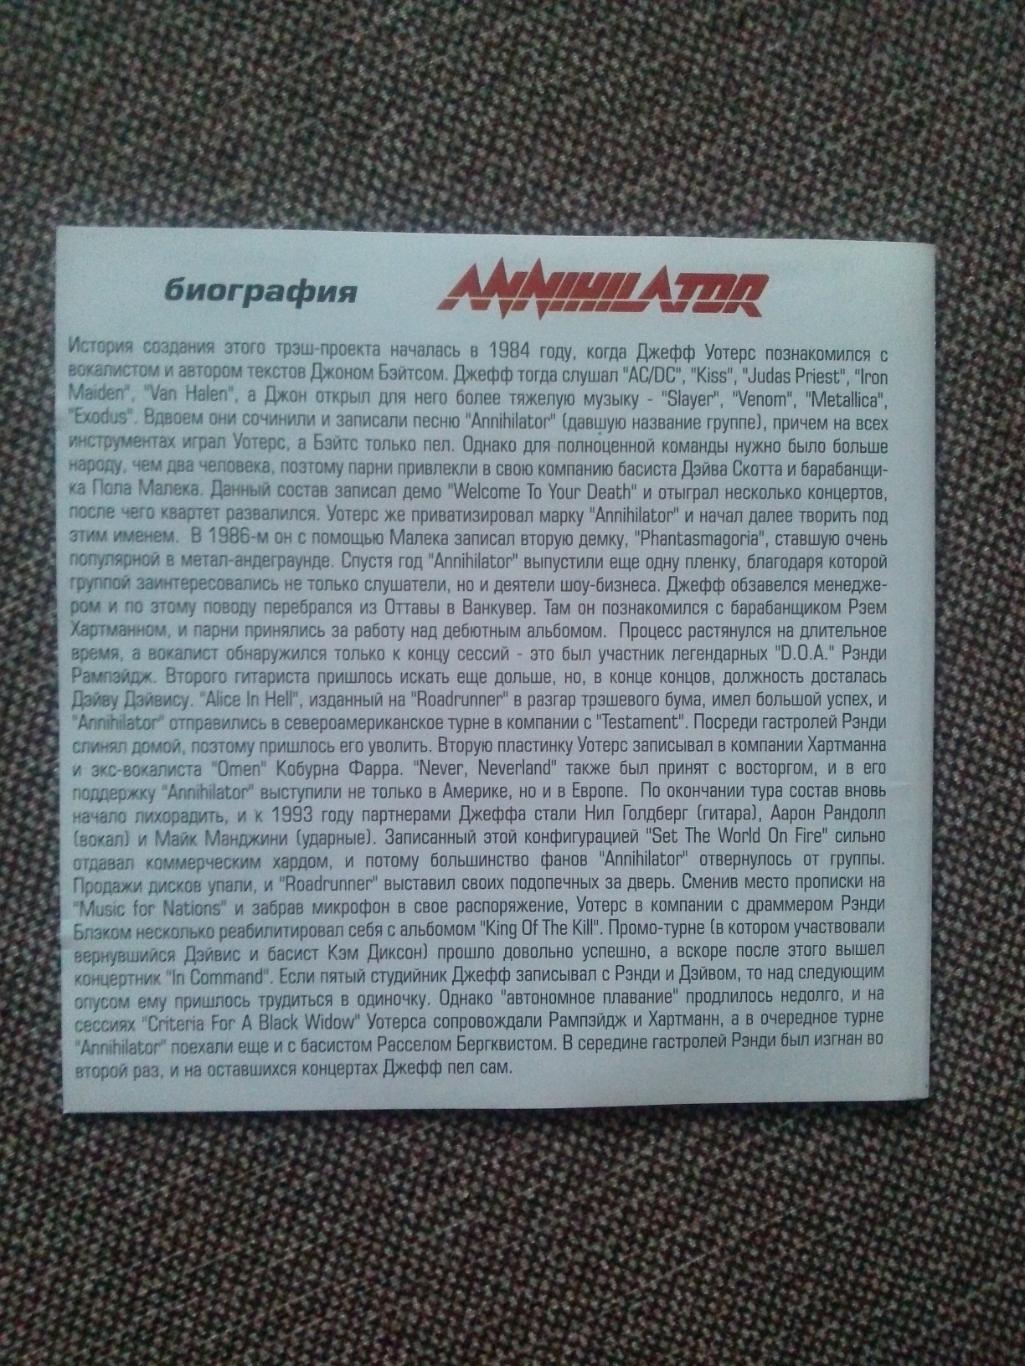 MP - 3 CD : группа Annihilator 1989 - 2007 гг. (13 альбомов) Thrash metal Рок 1